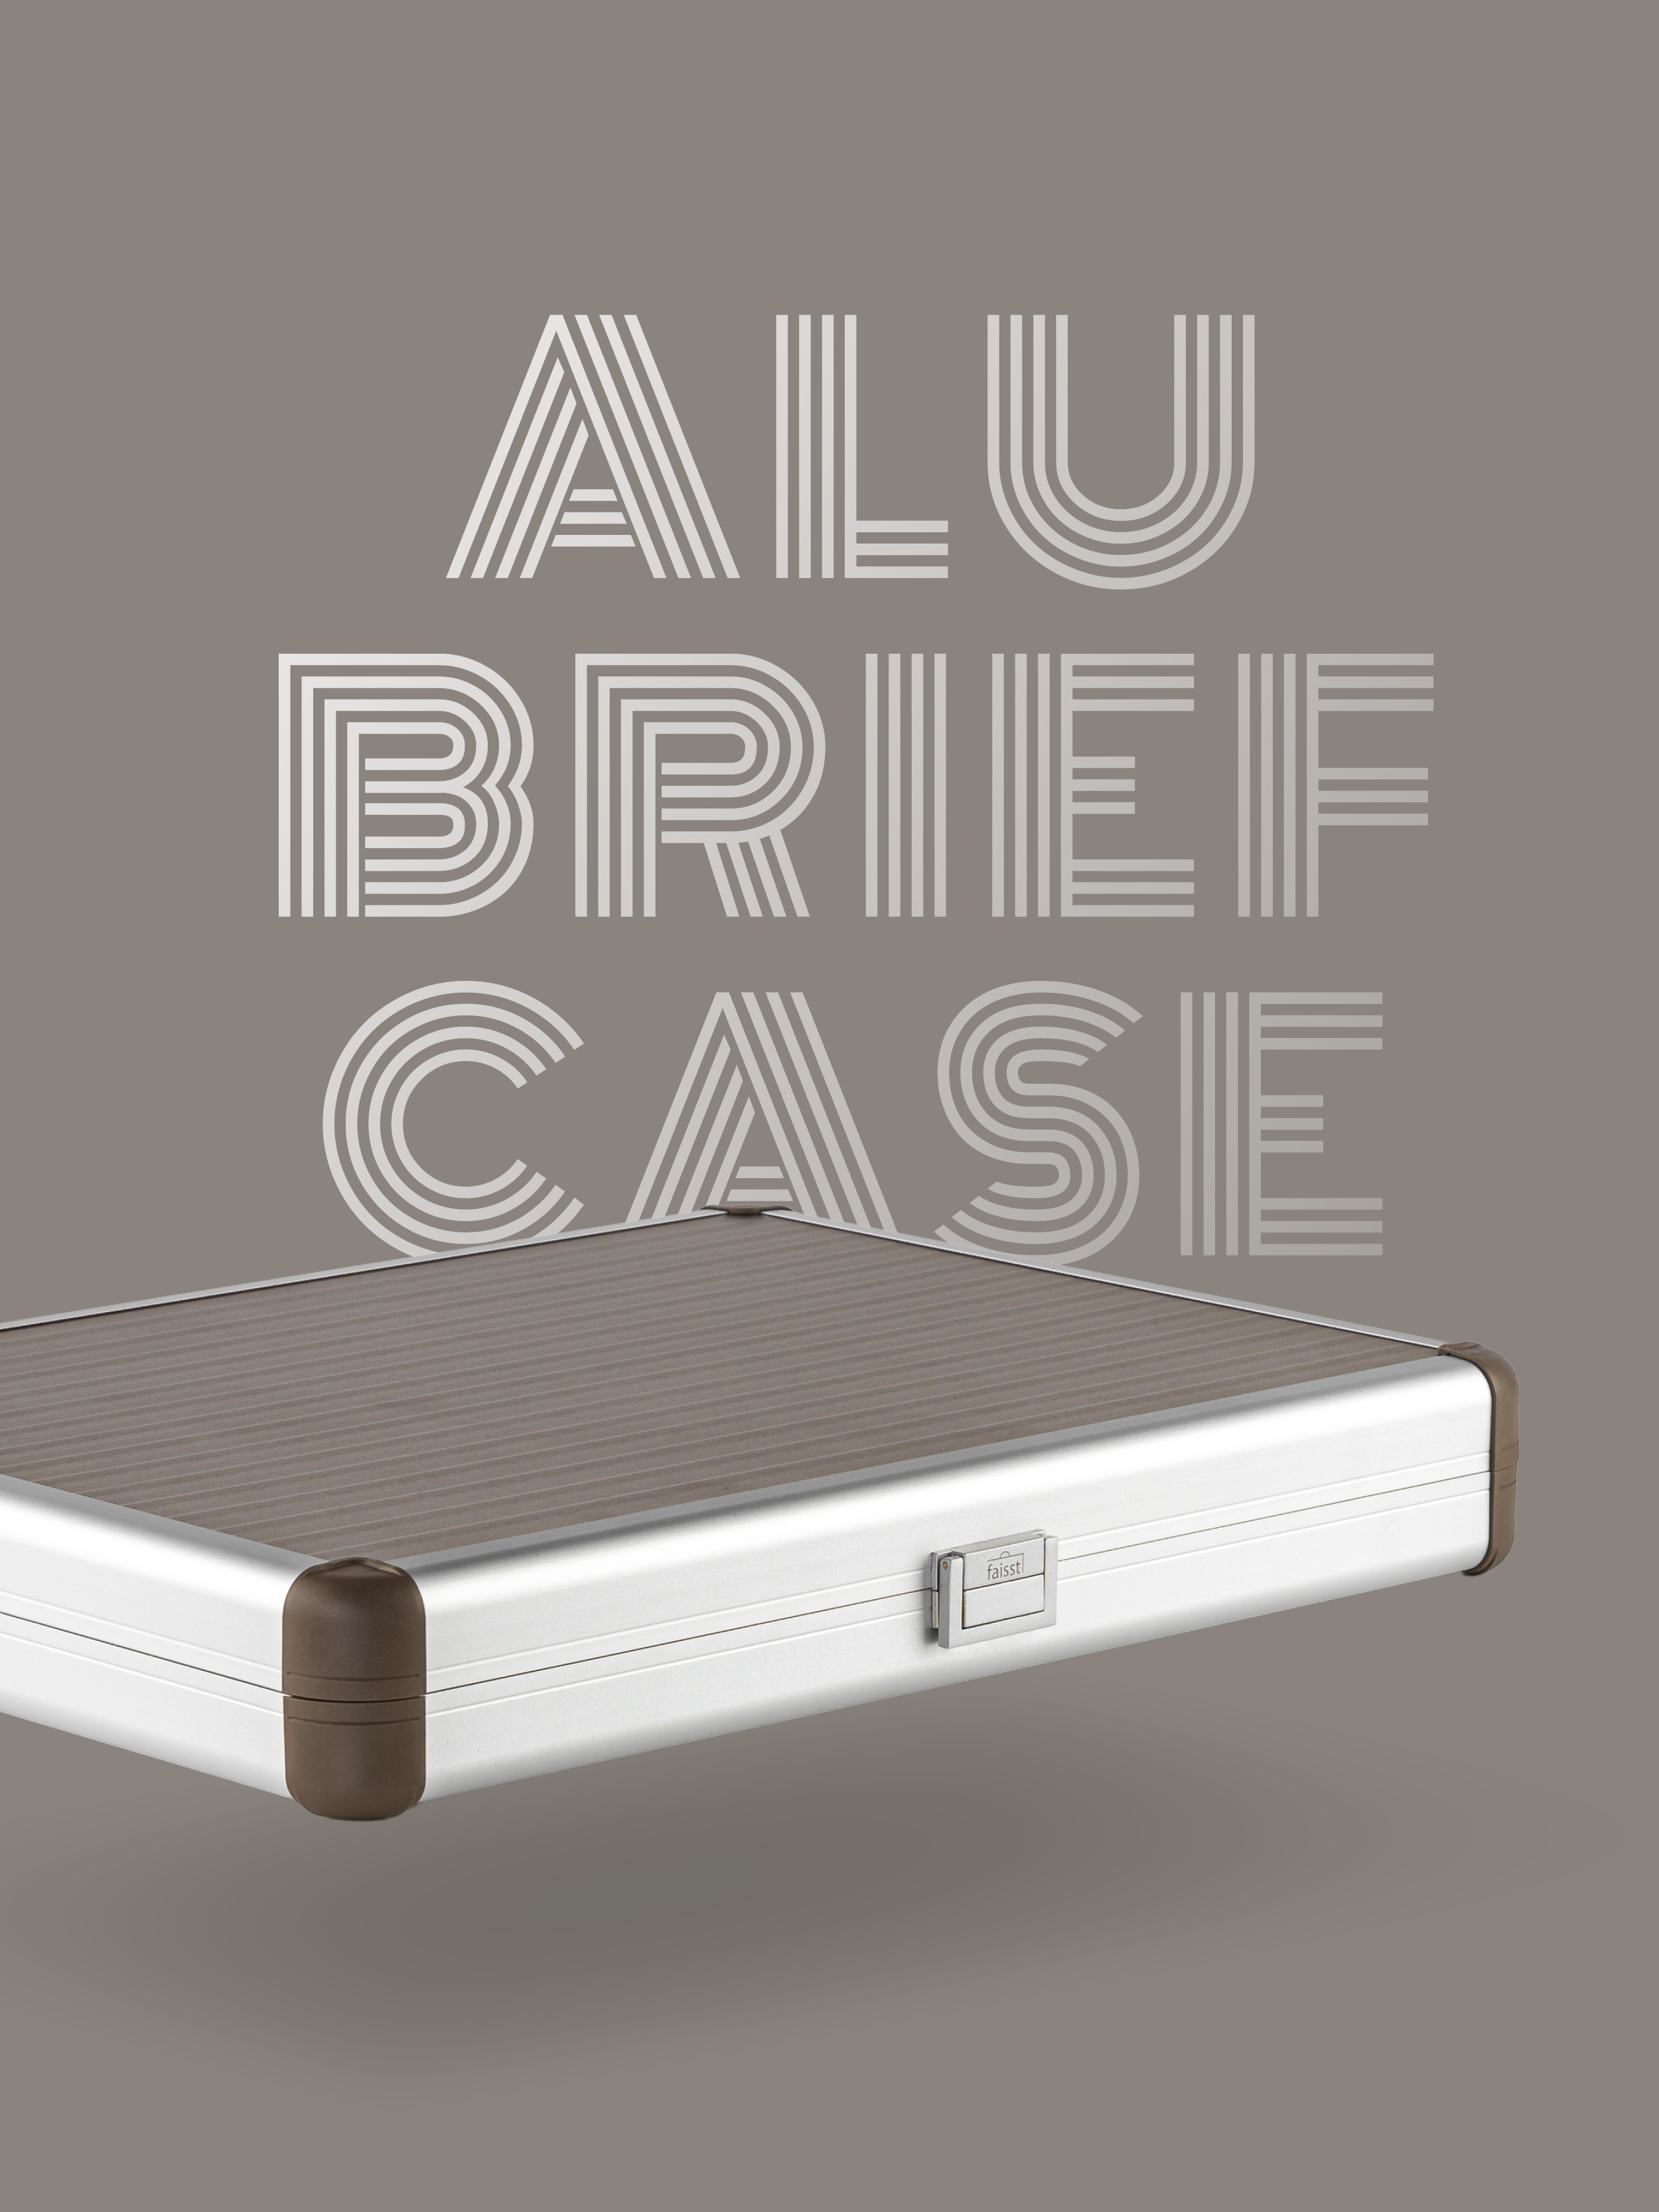 Alu Briefcase - Lightweight Product Presentation 